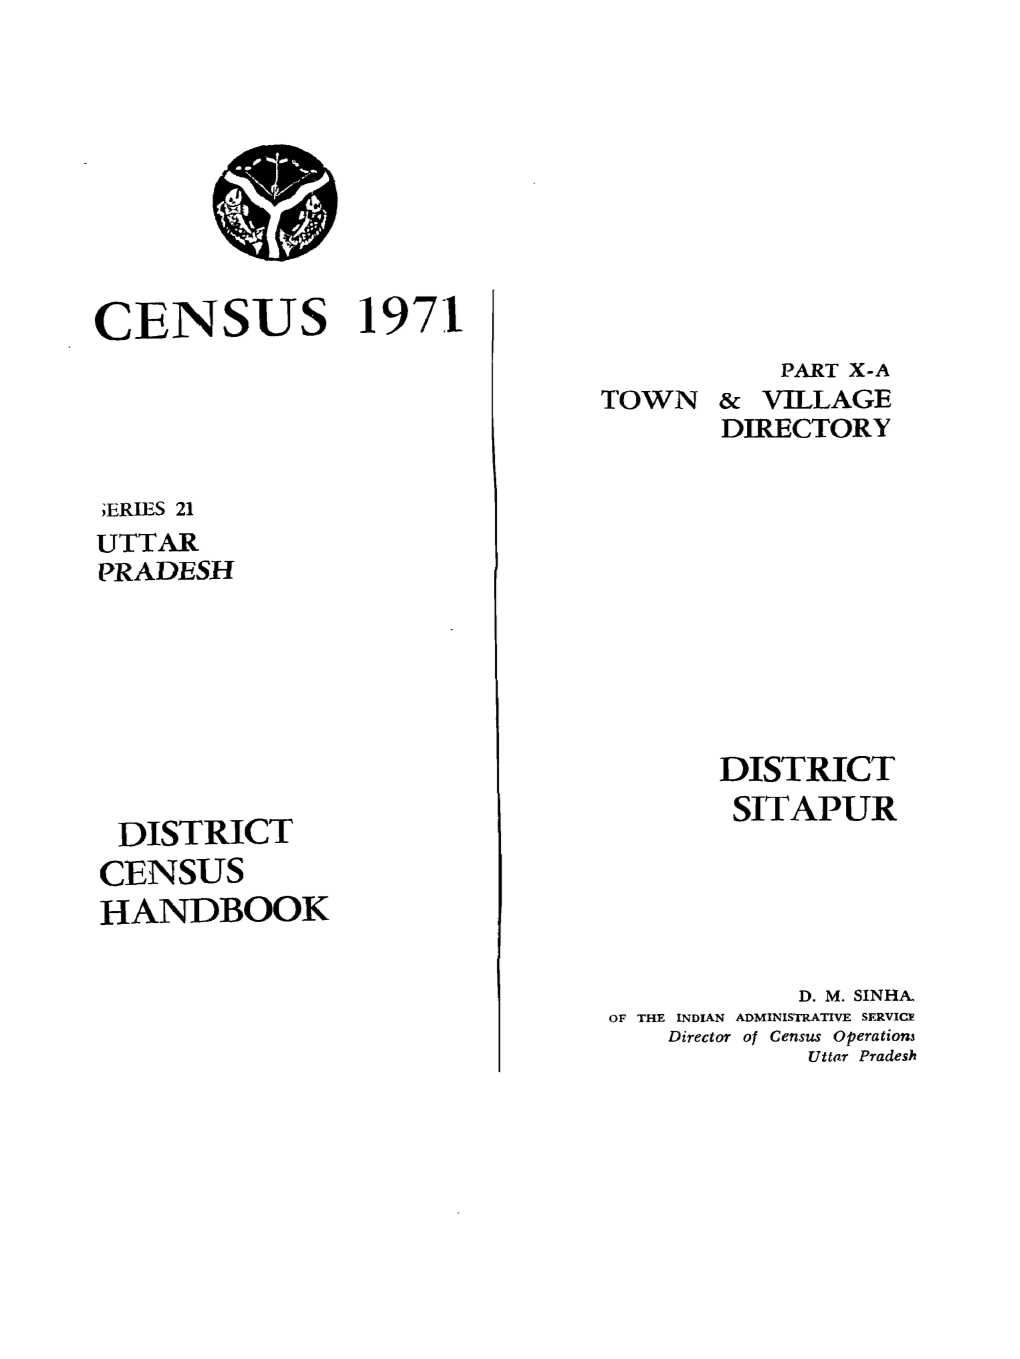 District Census Handbook, Sitapur, Part X-A, Series-21, Uttar Pradesh